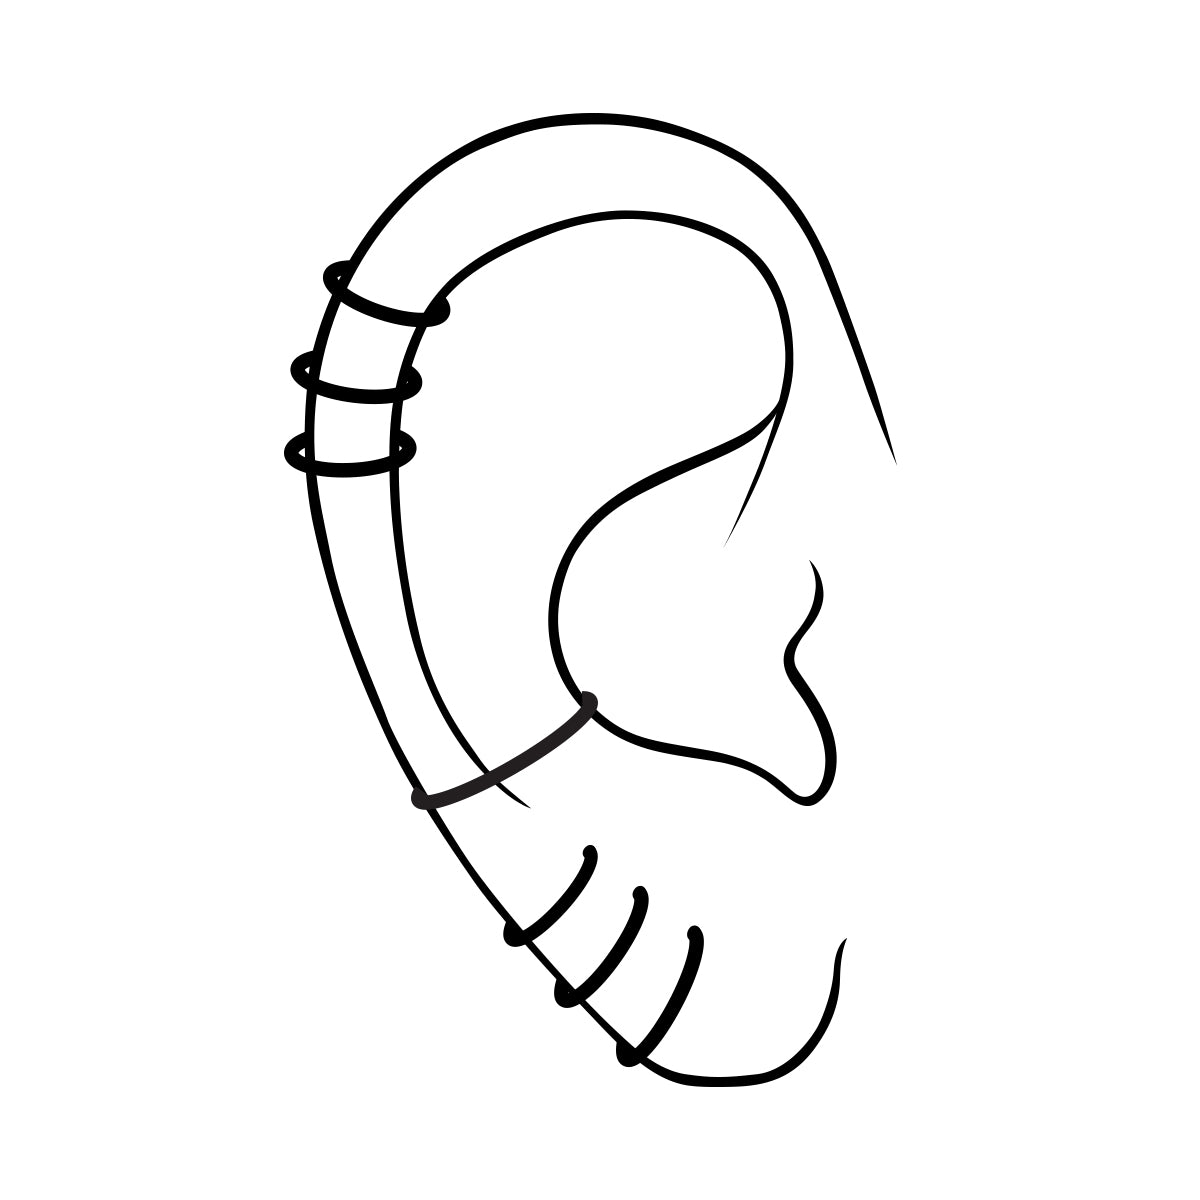 Steel hoop earring with ball. 2 x 10-16mm